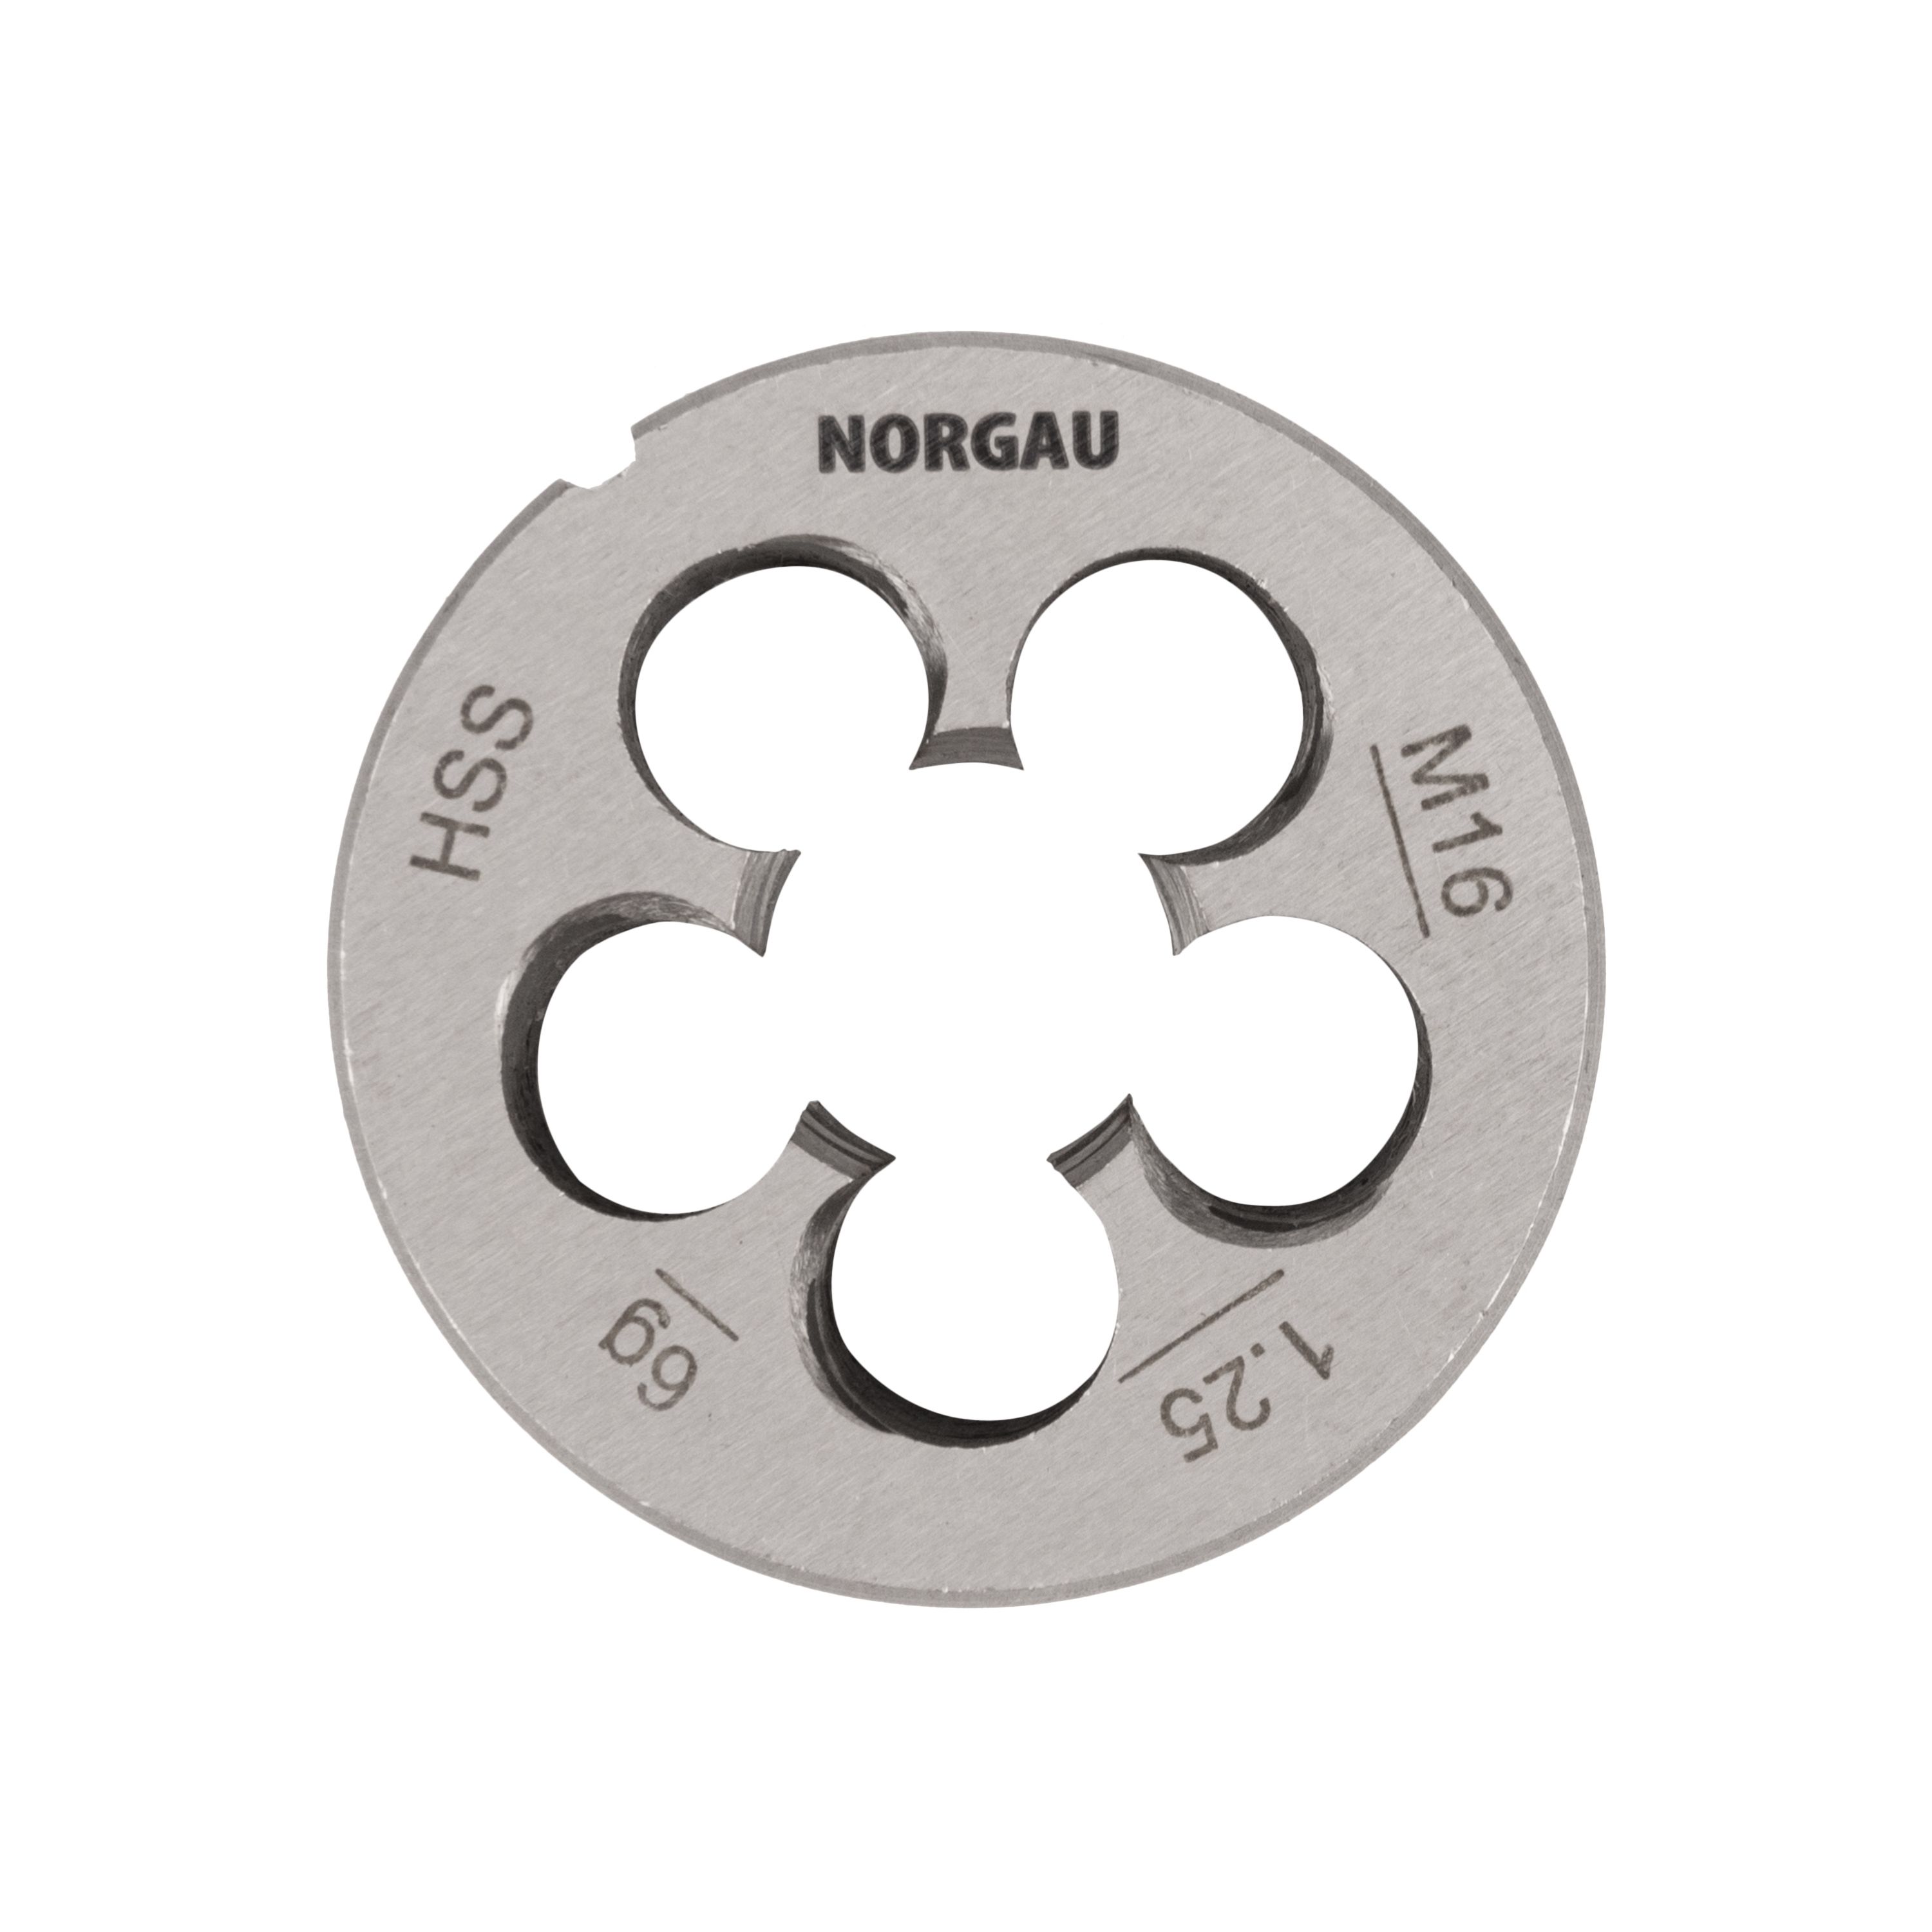 Плашка NORGAU Industrial MF16x1.25х45 мм, метрическая, угол 60°, по DIN223, HSS плашка м5х0 8 мм norgau industrial метрическая угол 60° по din223 hss е vap